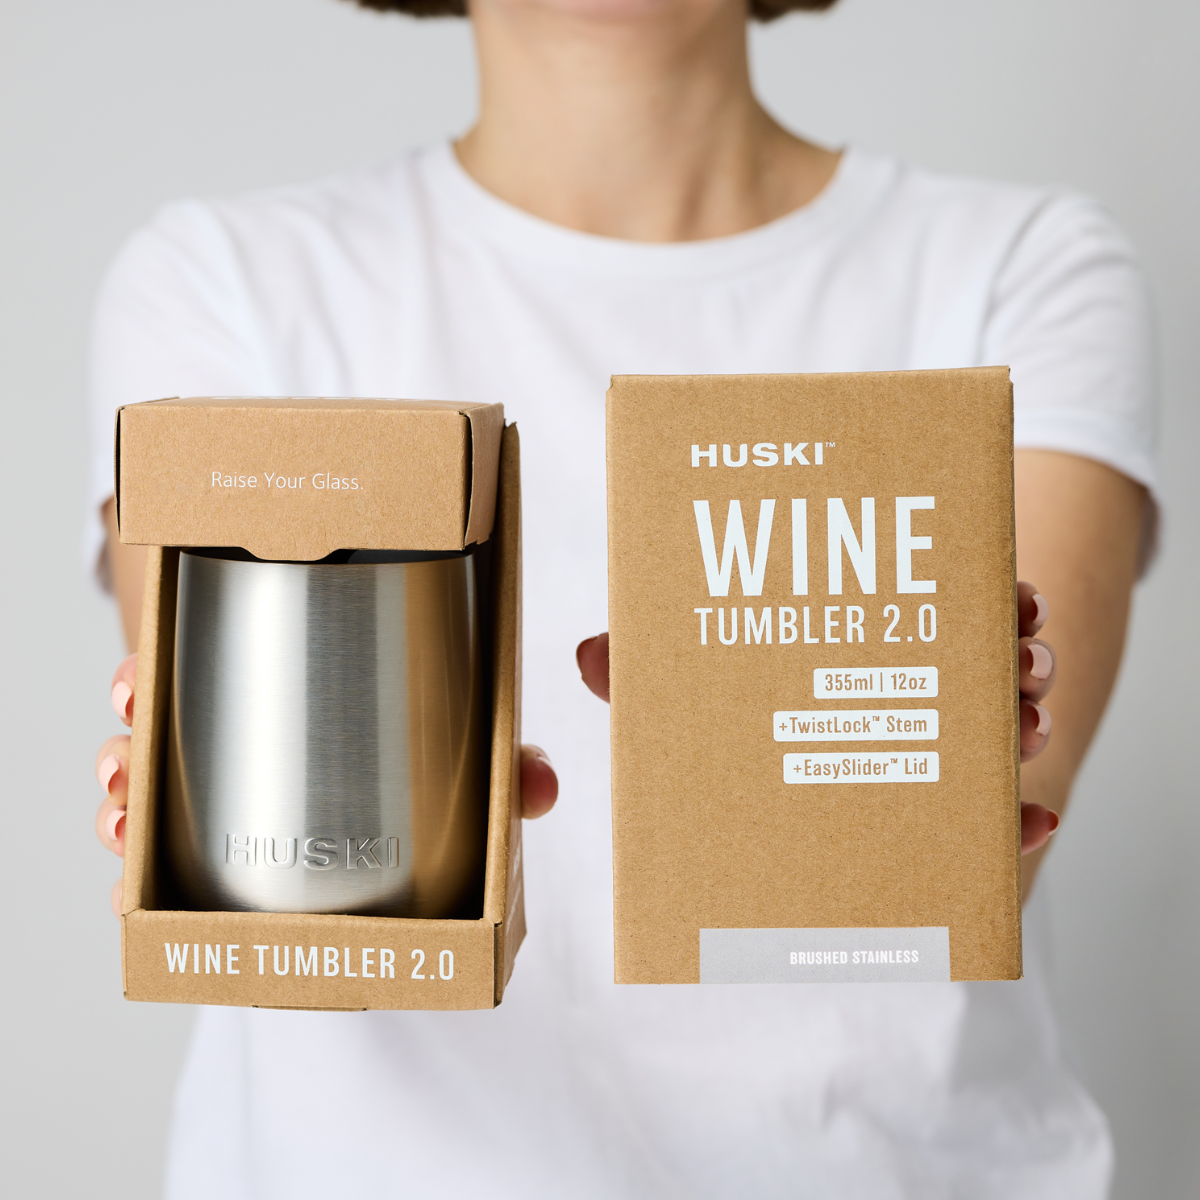 NEW: Huski Wine Tumbler 2.0